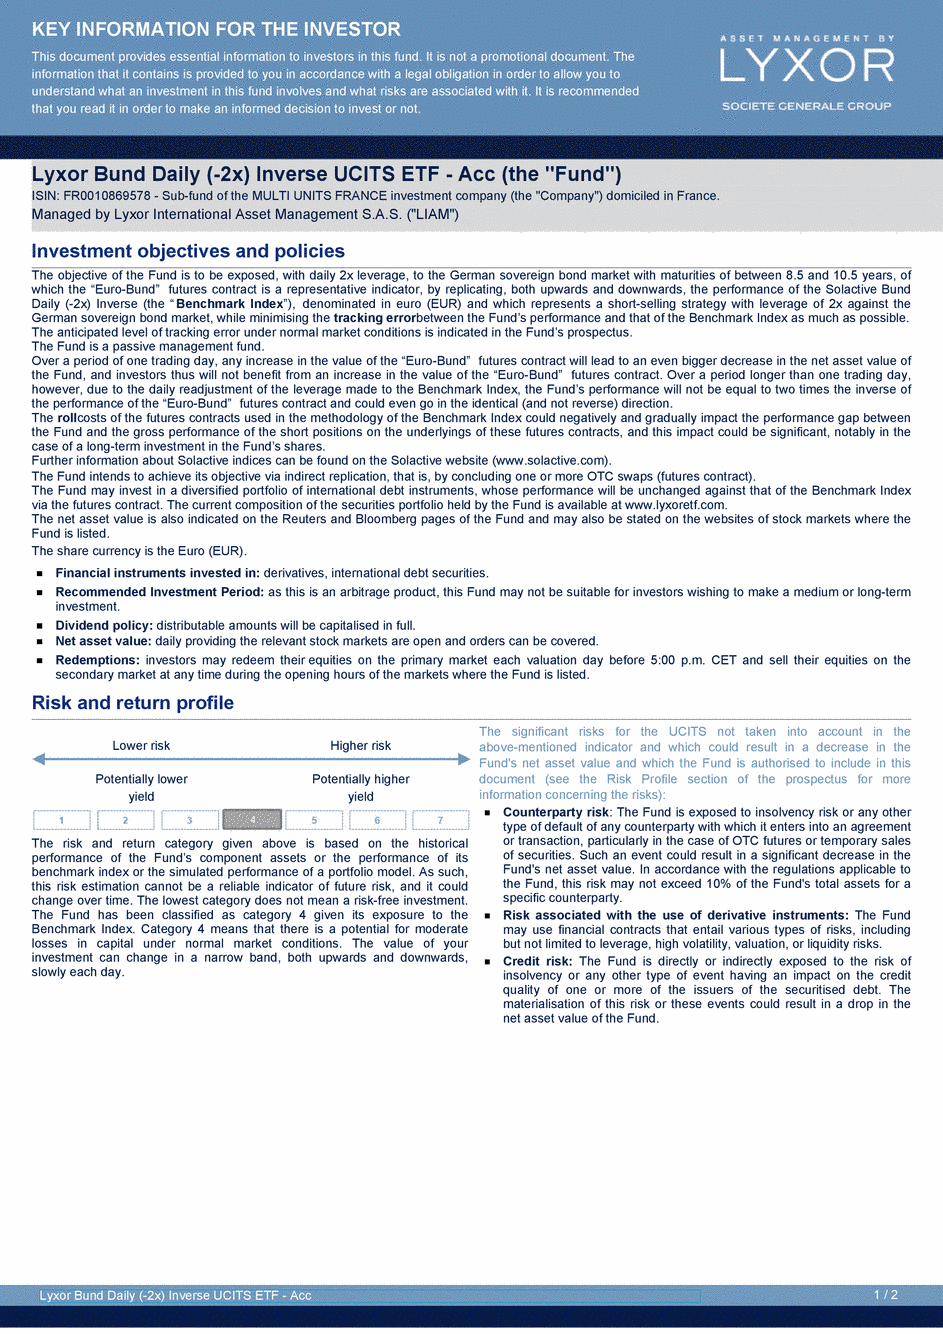 DICI Lyxor Bund Daily (-2x) Inverse UCITS ETF - Acc - 21/06/2019 - Anglais